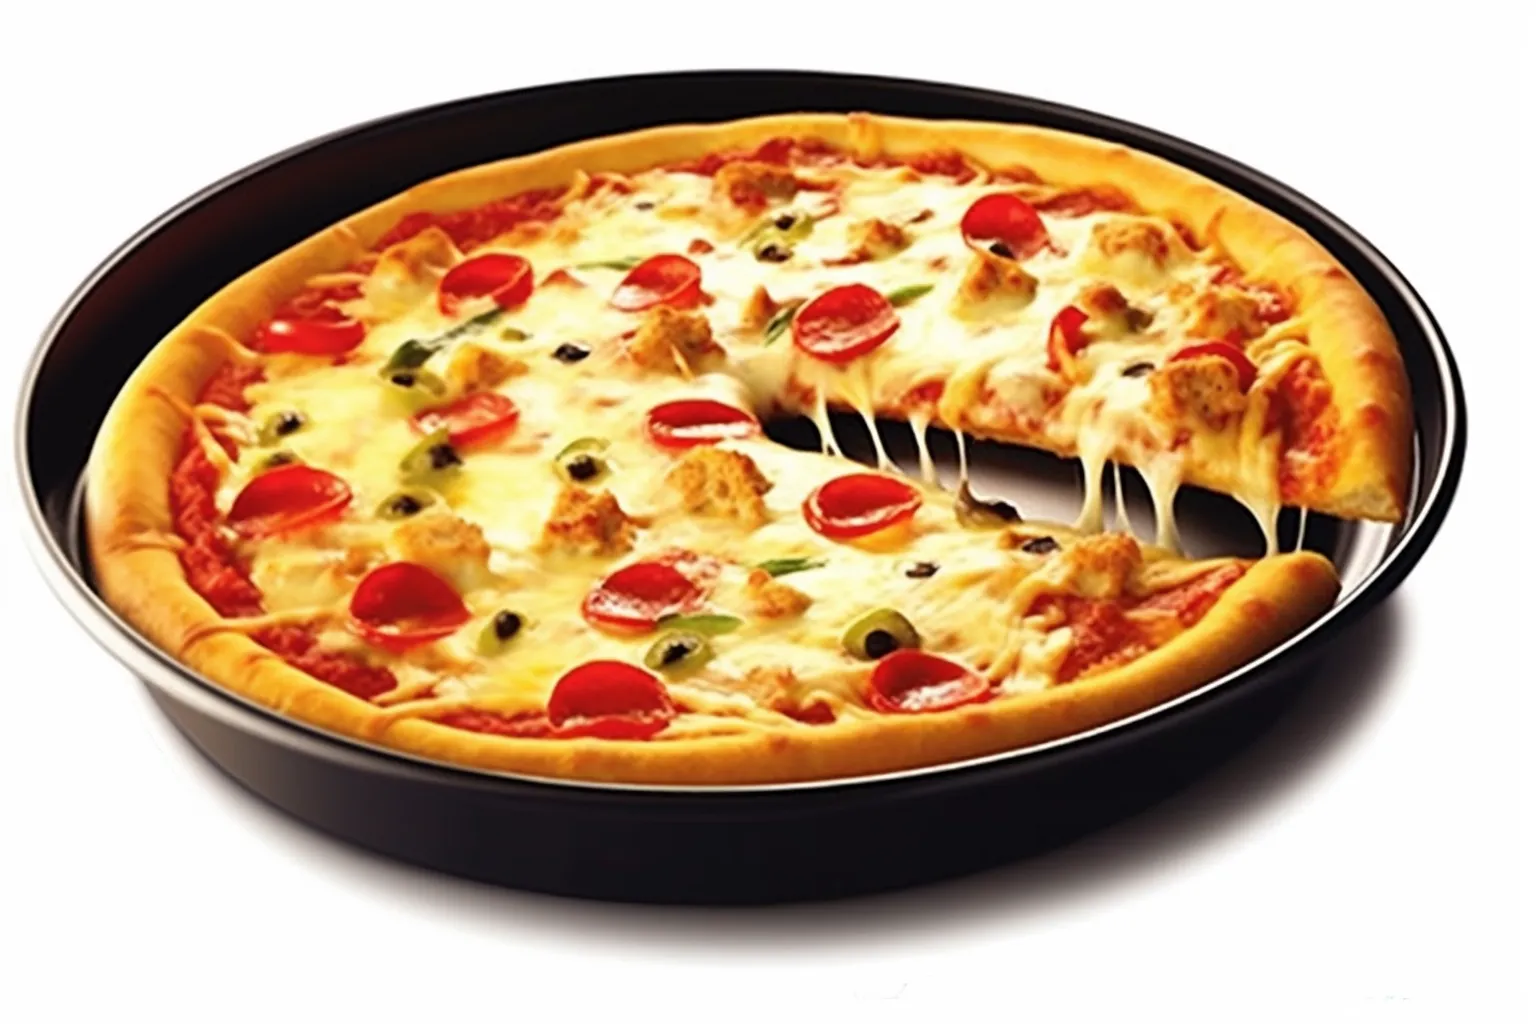 USA Pan Nonstick Pizza Pan, 12